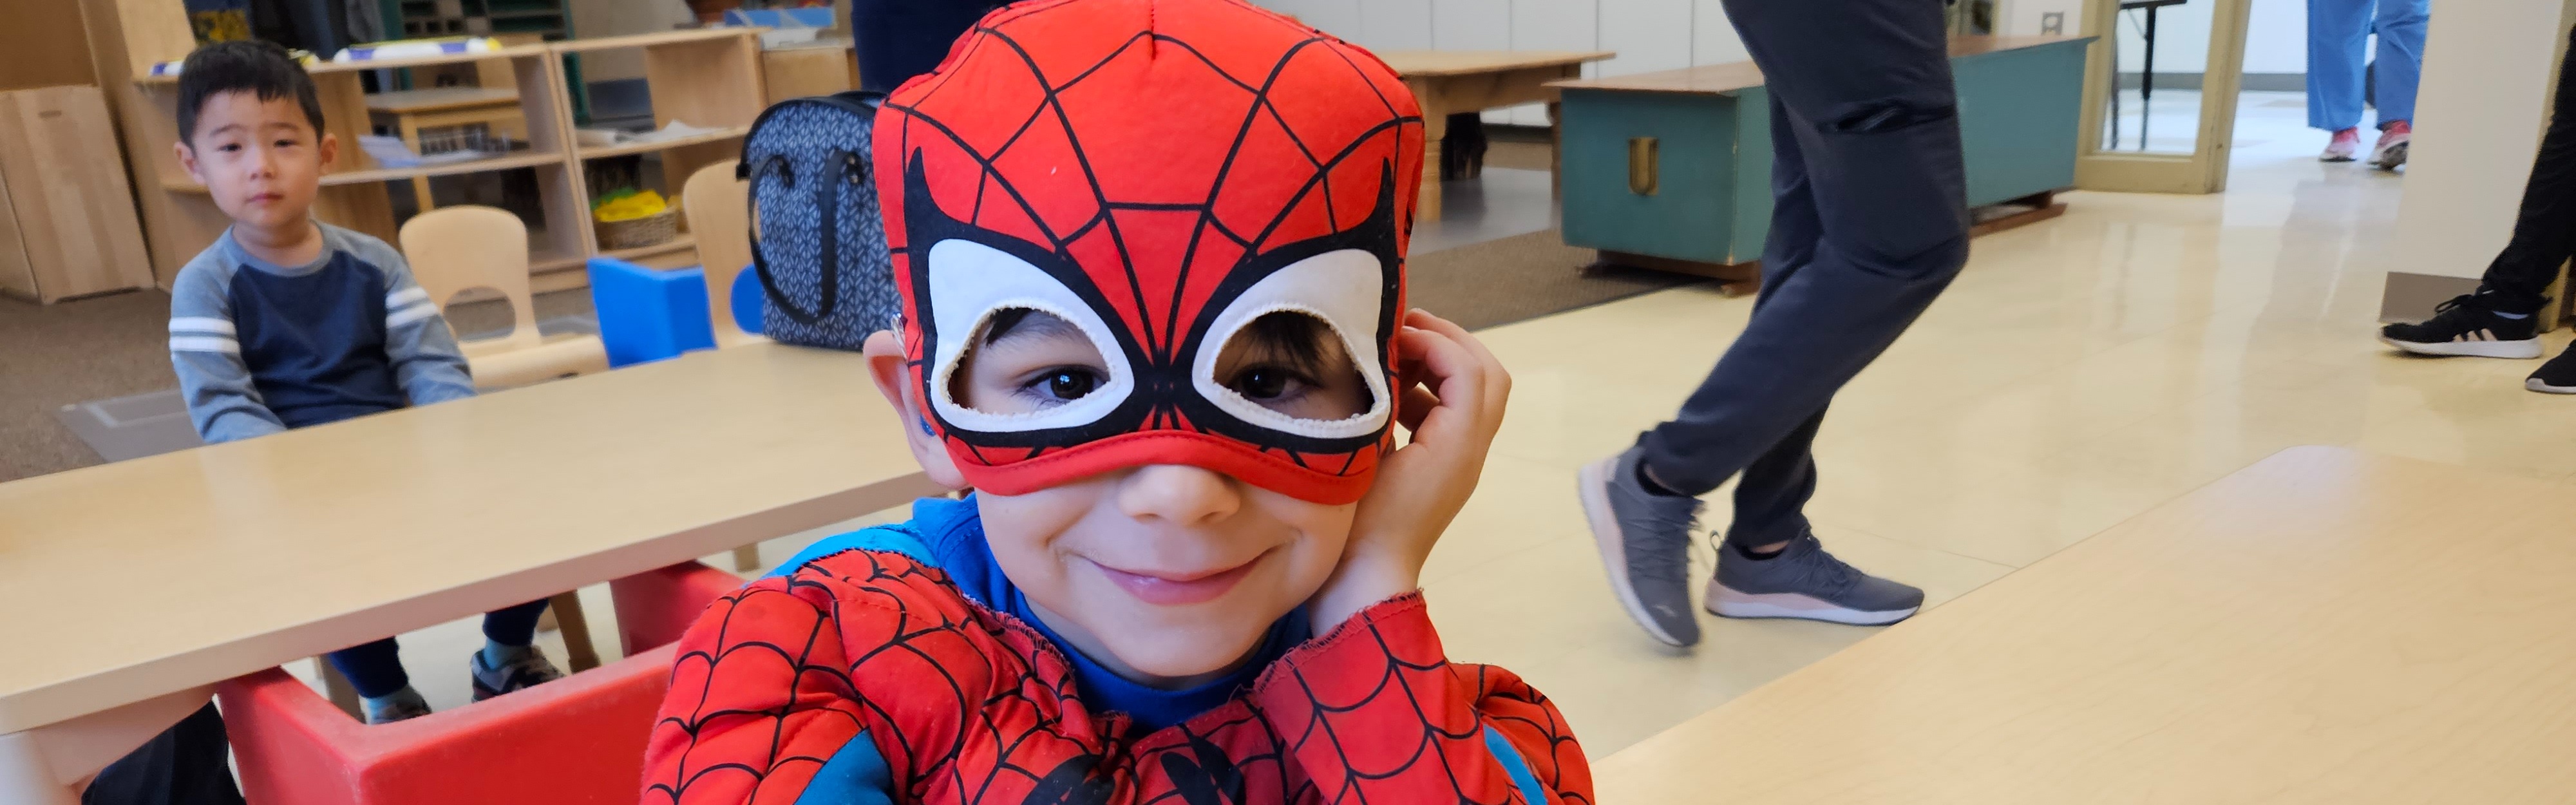 Kindergarten student dressed as spiderman